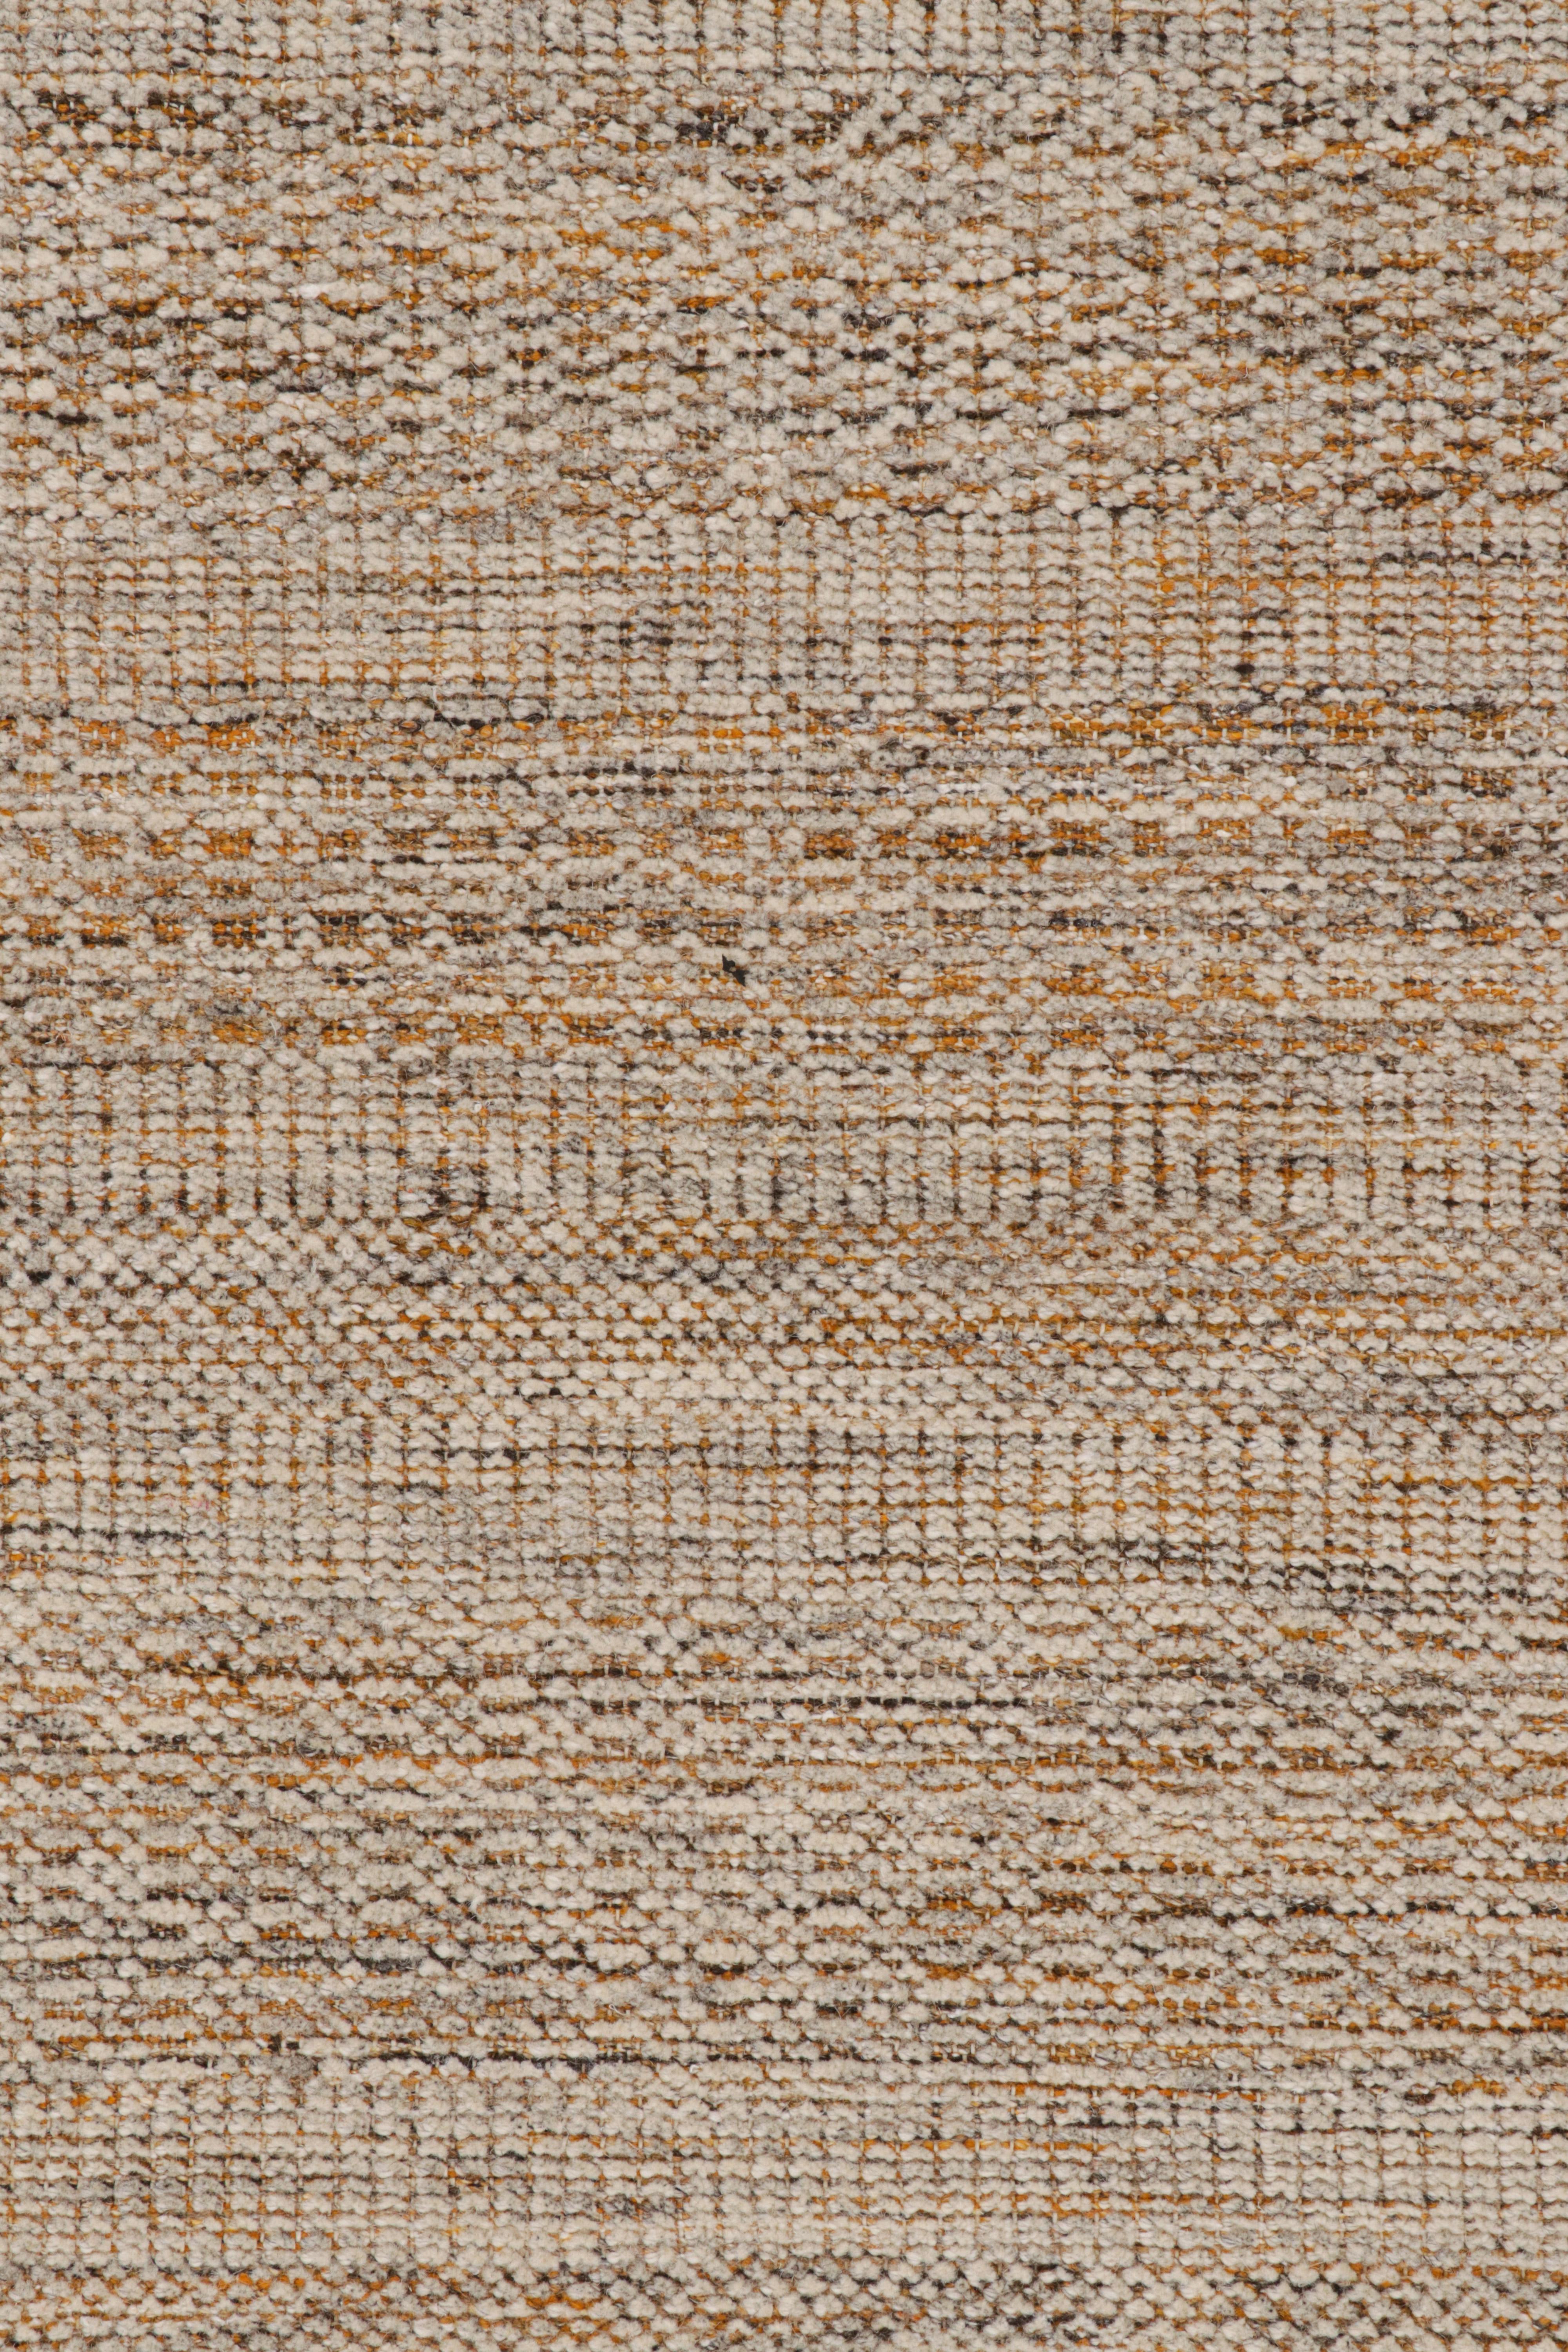 Rug & Kilim’s Contemporary Textural Kilim in Beige-brown Orange and White Tones